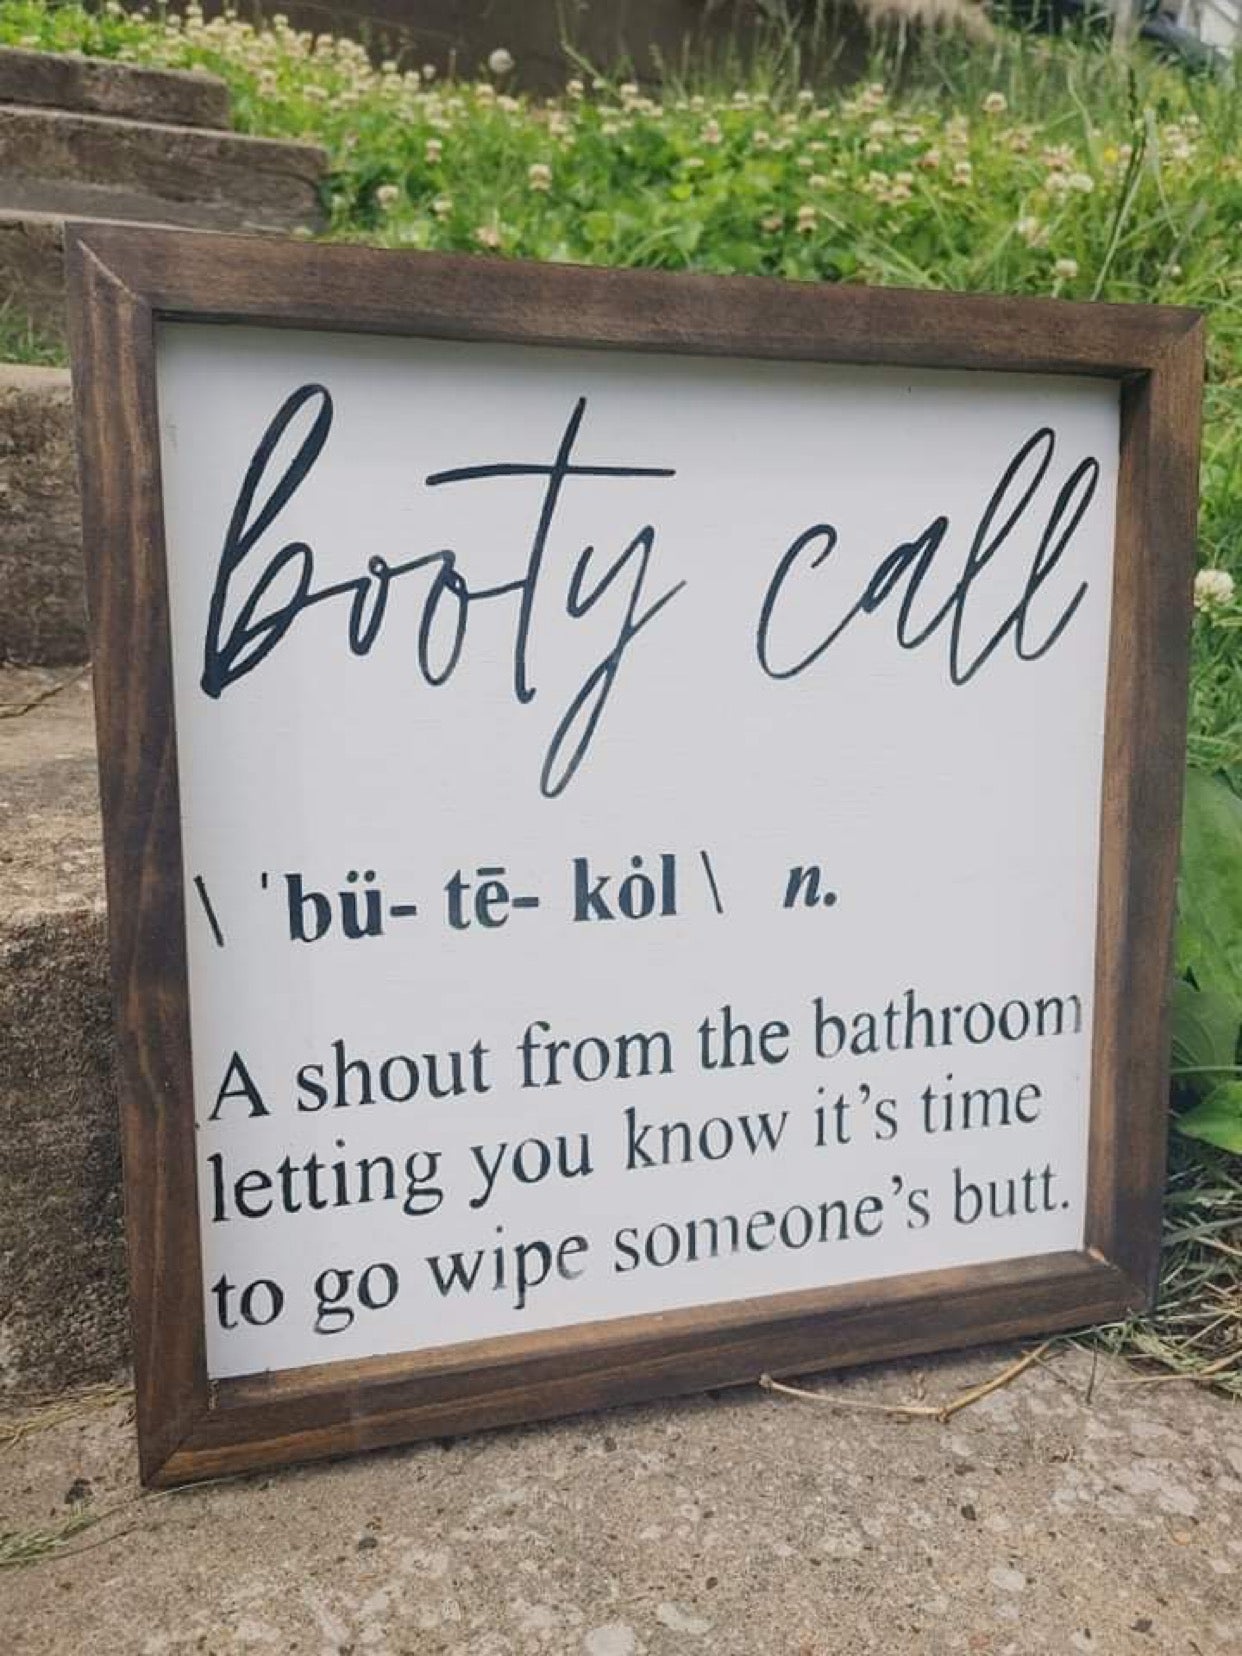 Booty Call